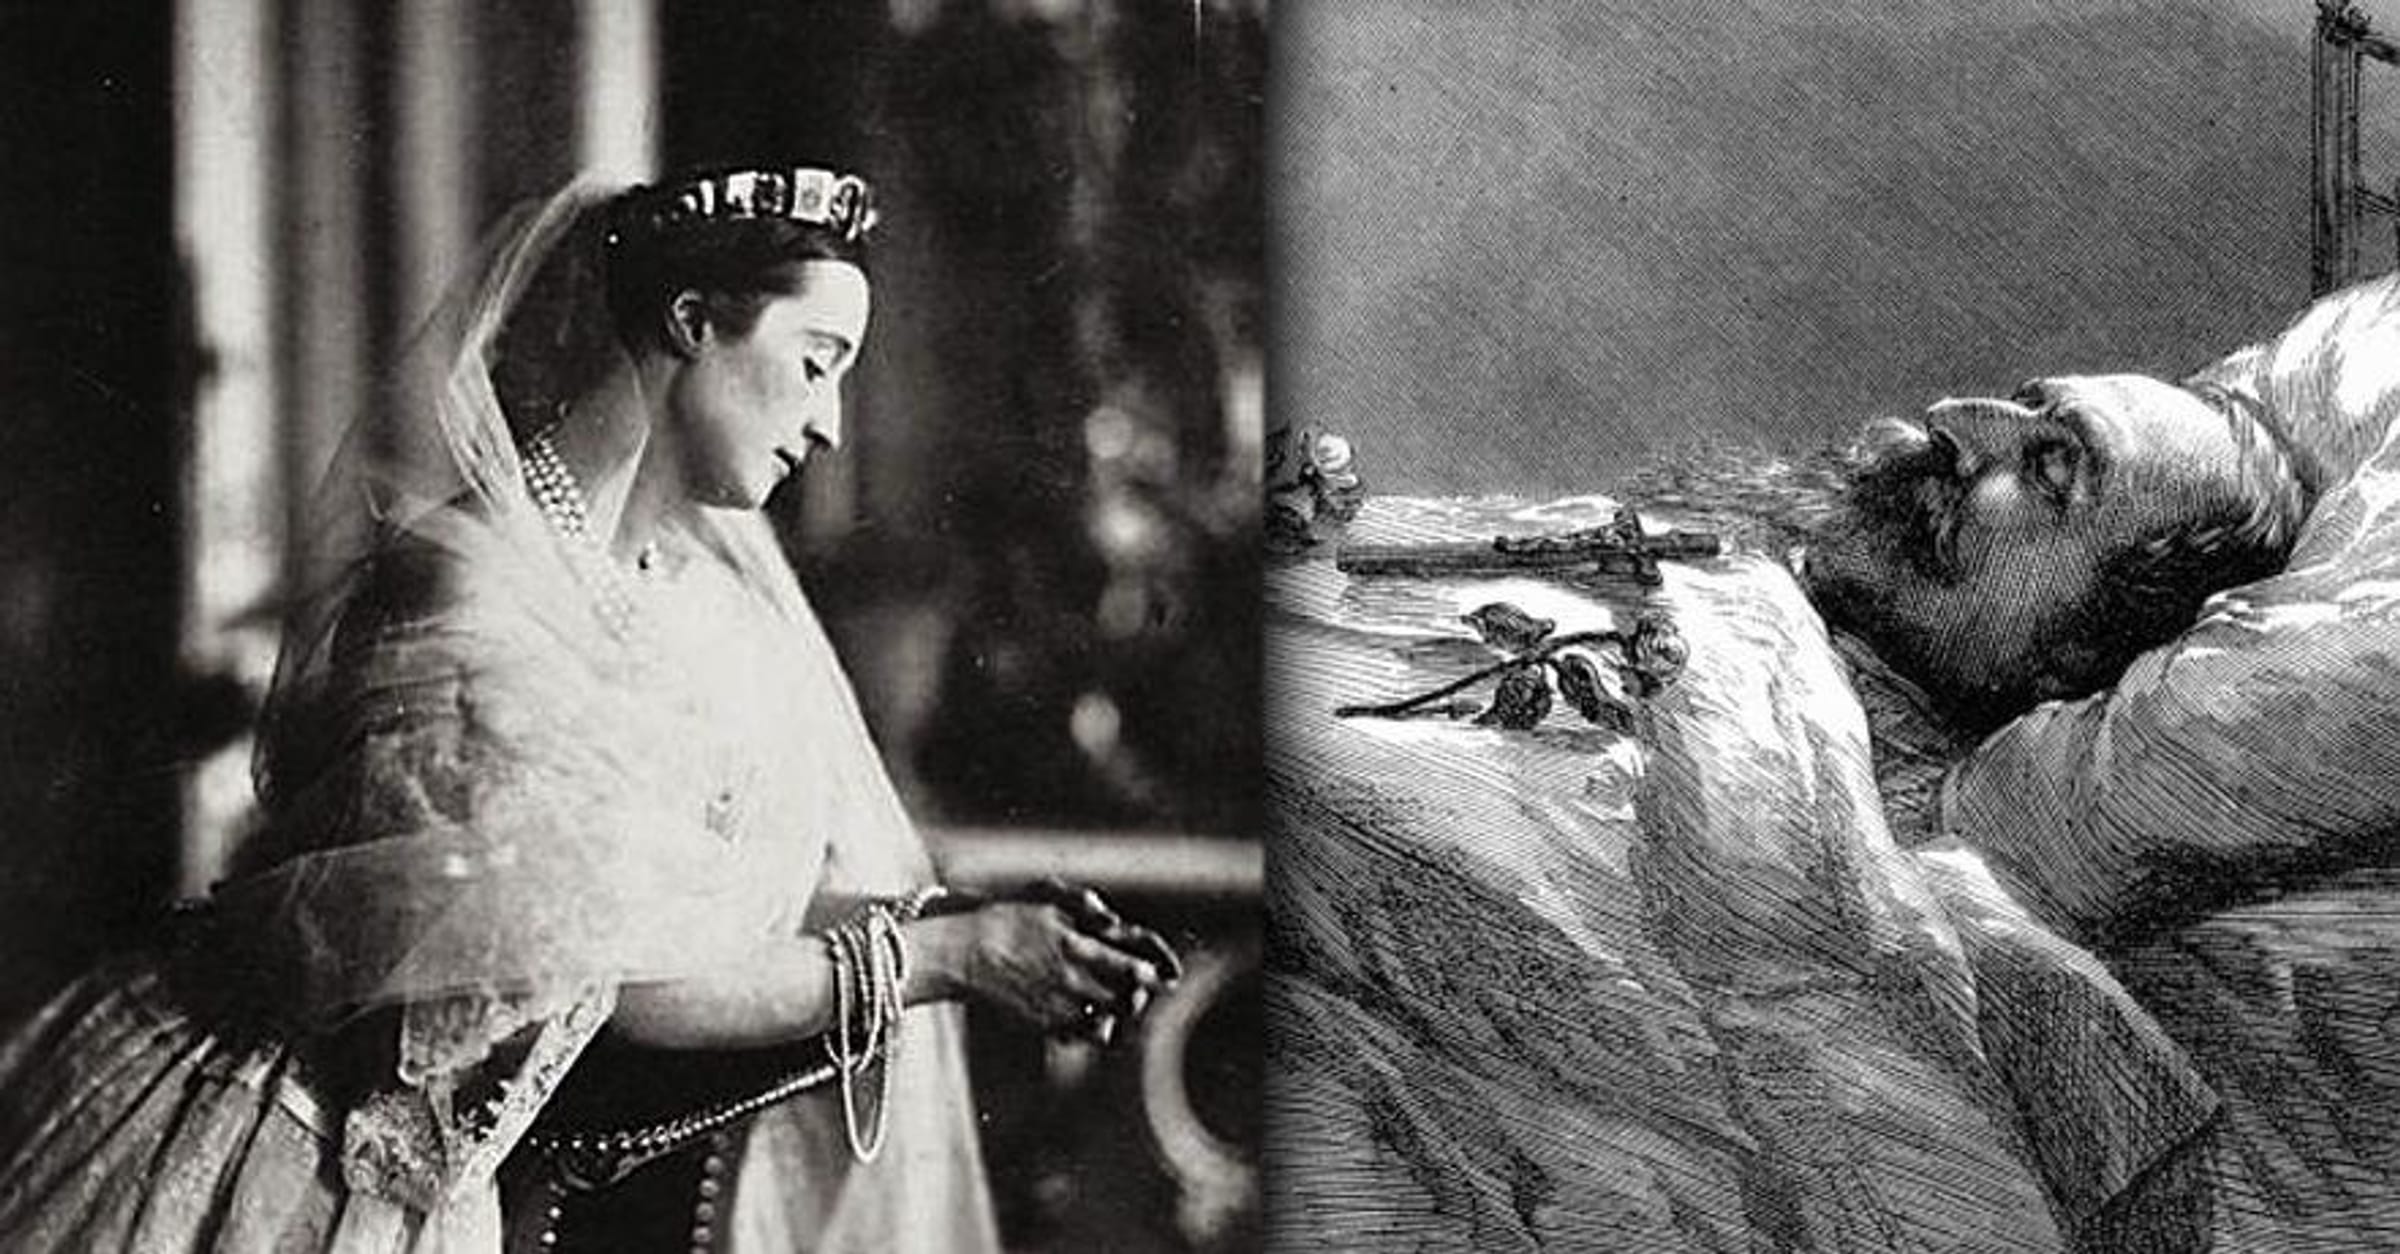 Empress Eugenie de Montijo